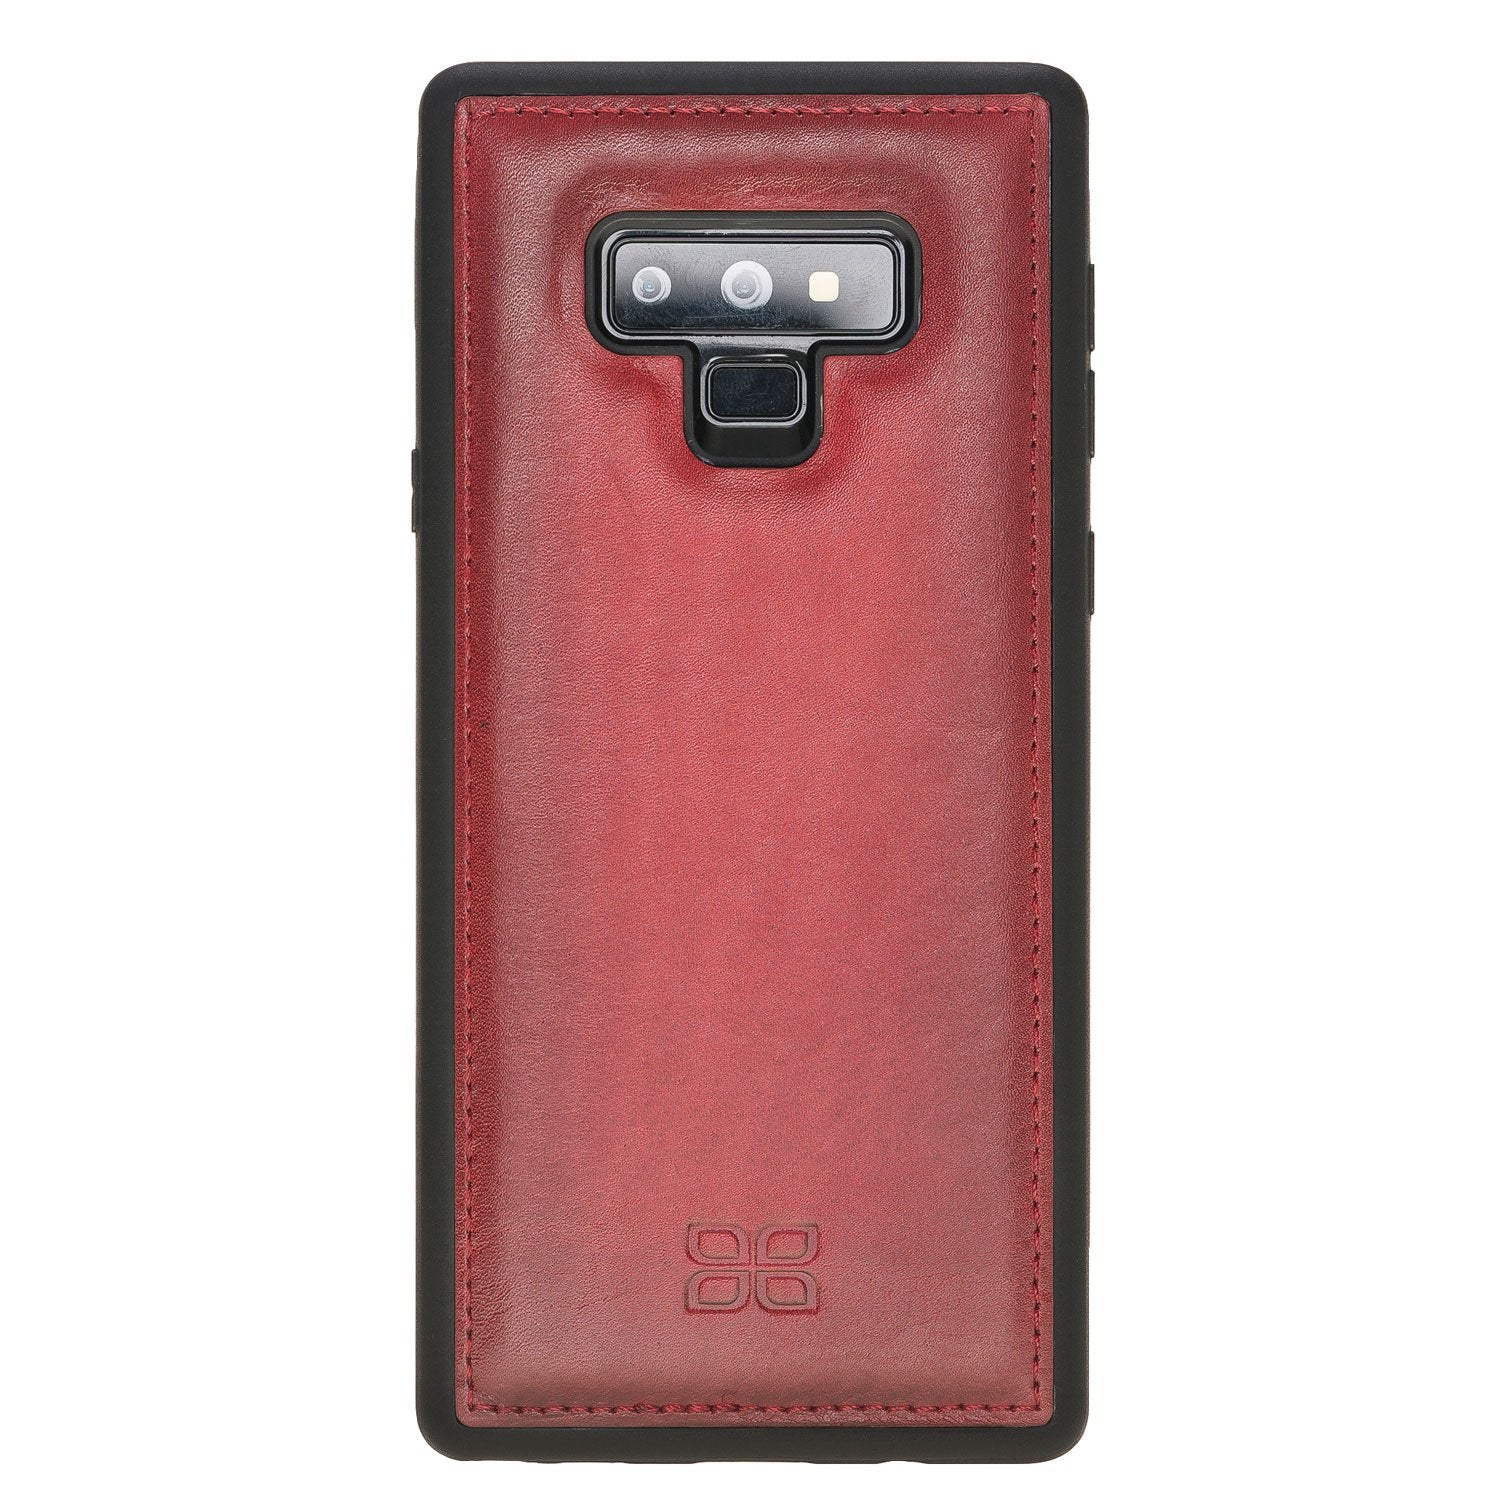 Bouletta Flex Cover Back Echt Leder Case für Samsung Note 9 - Vegetal brüniert Rot